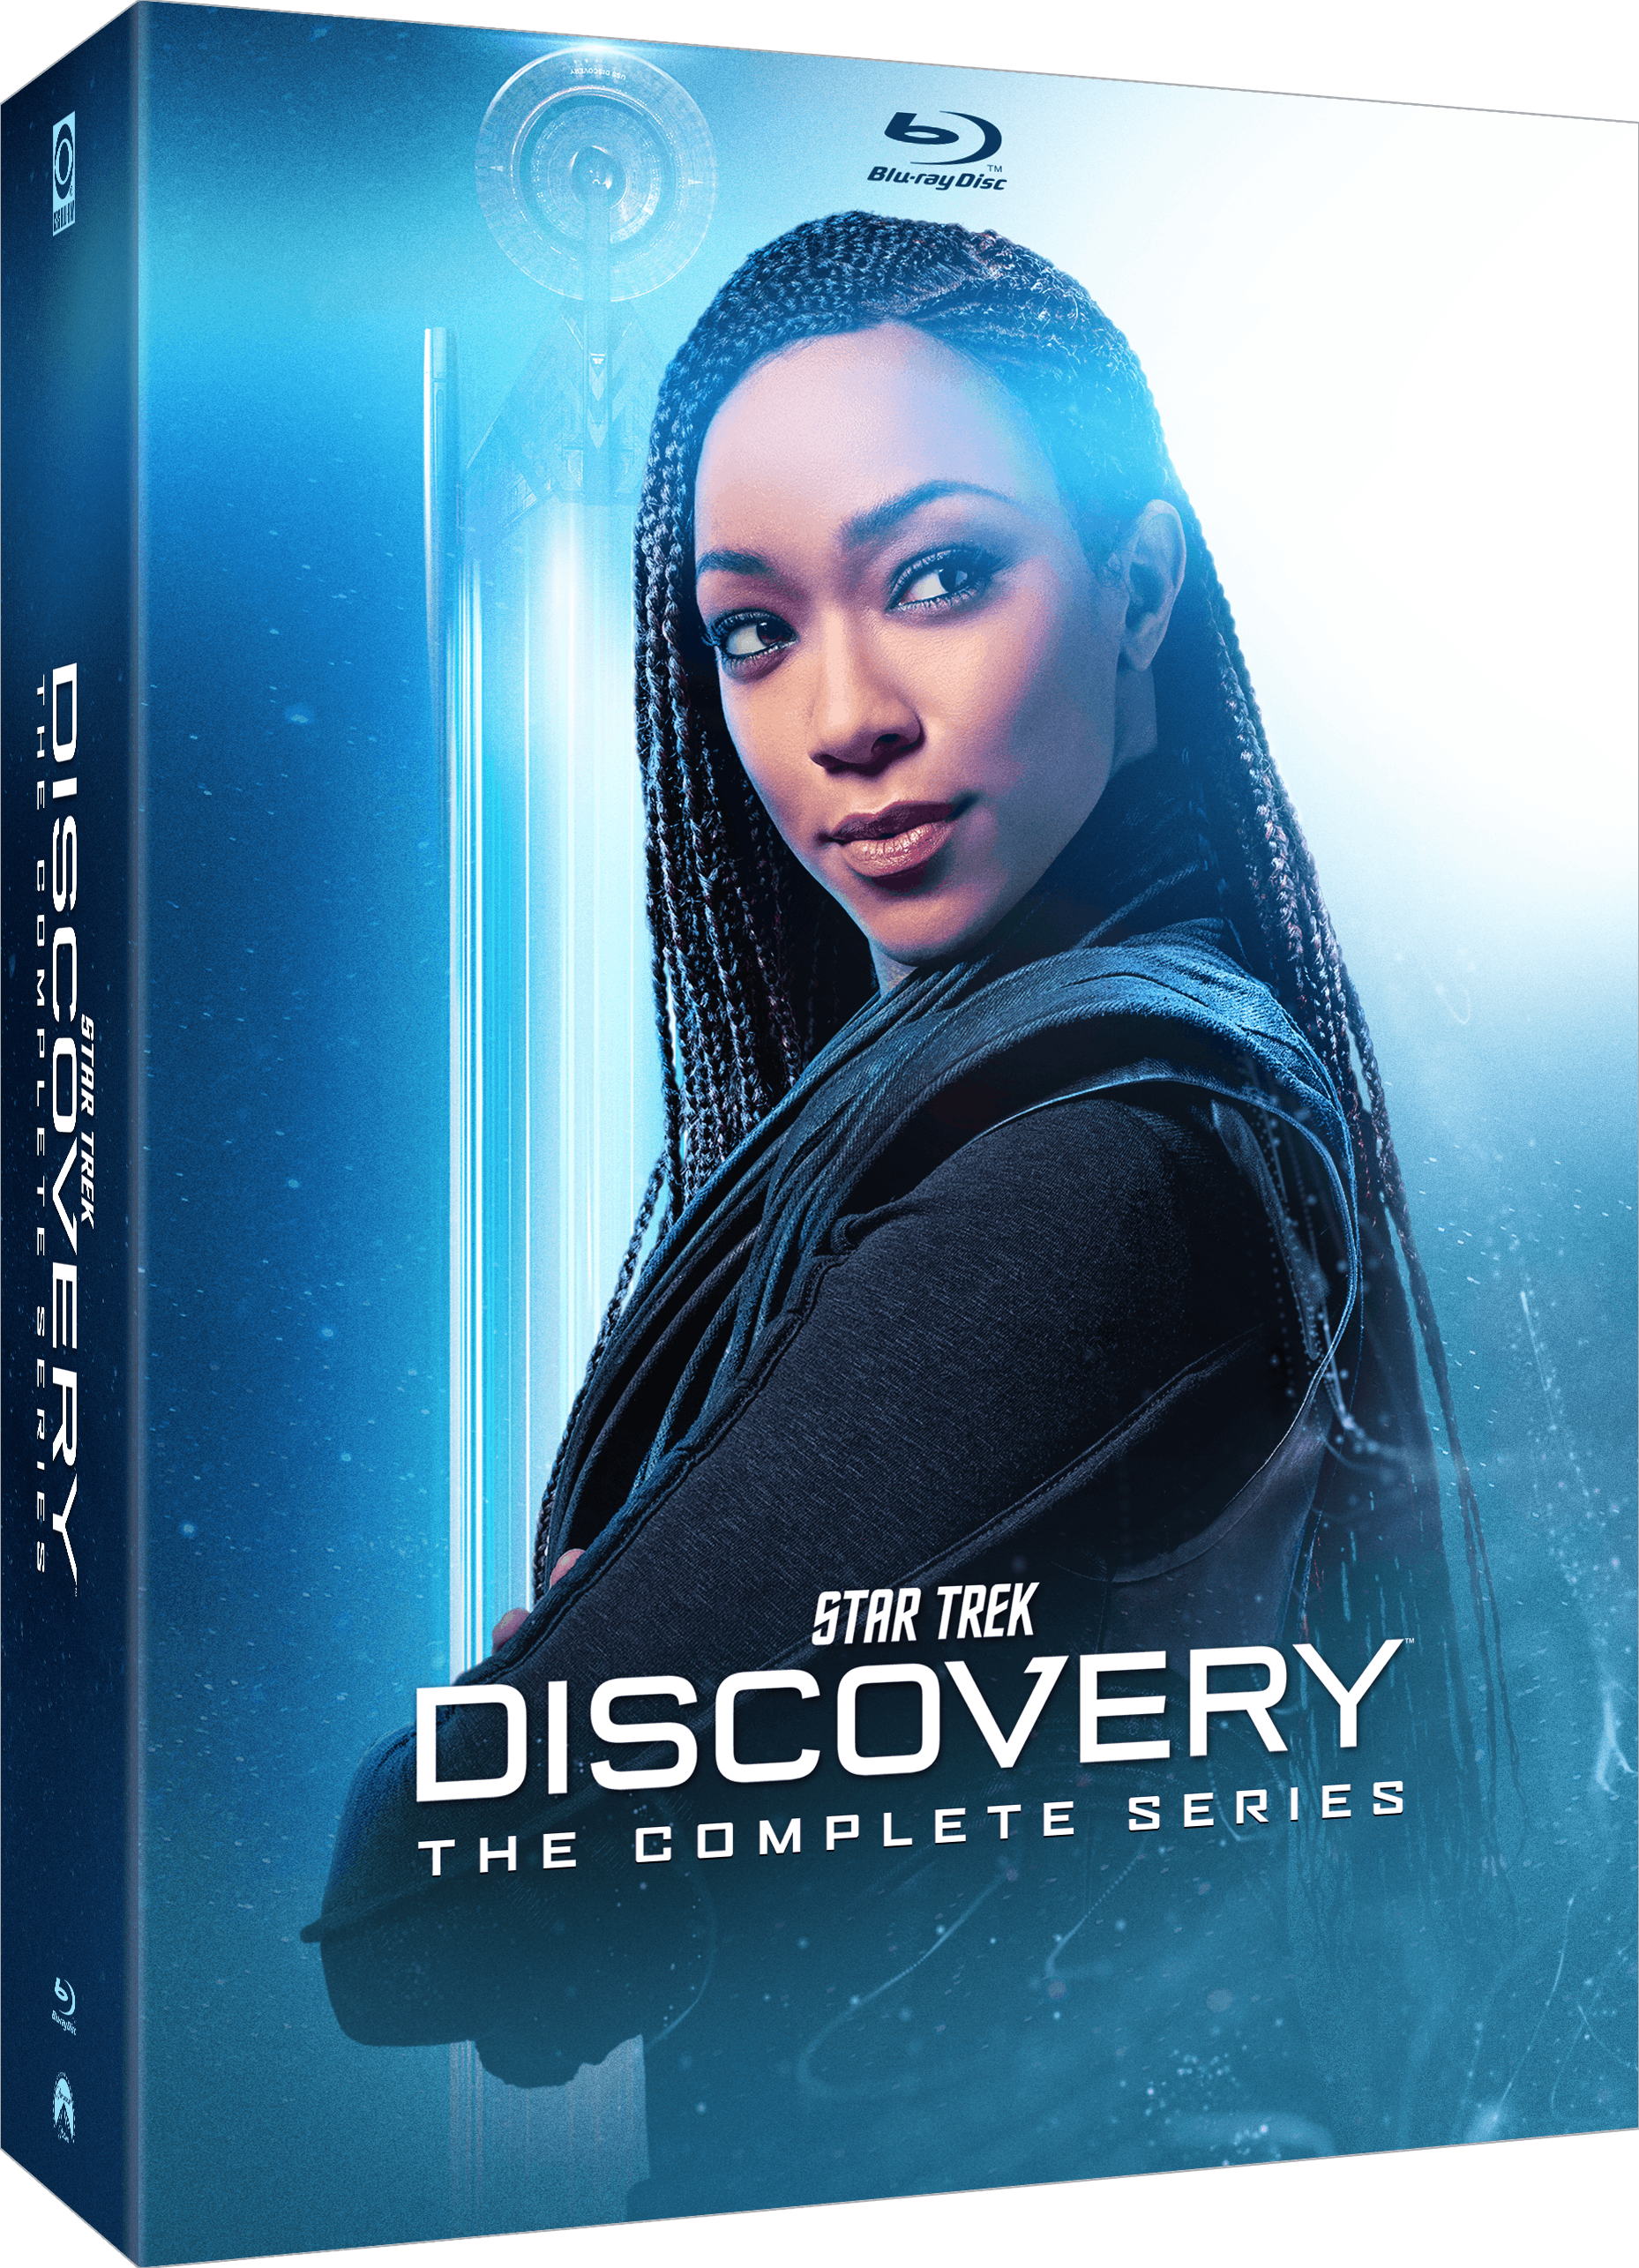 Star Trek: Discovery The Complete Series Blu-ray packshot